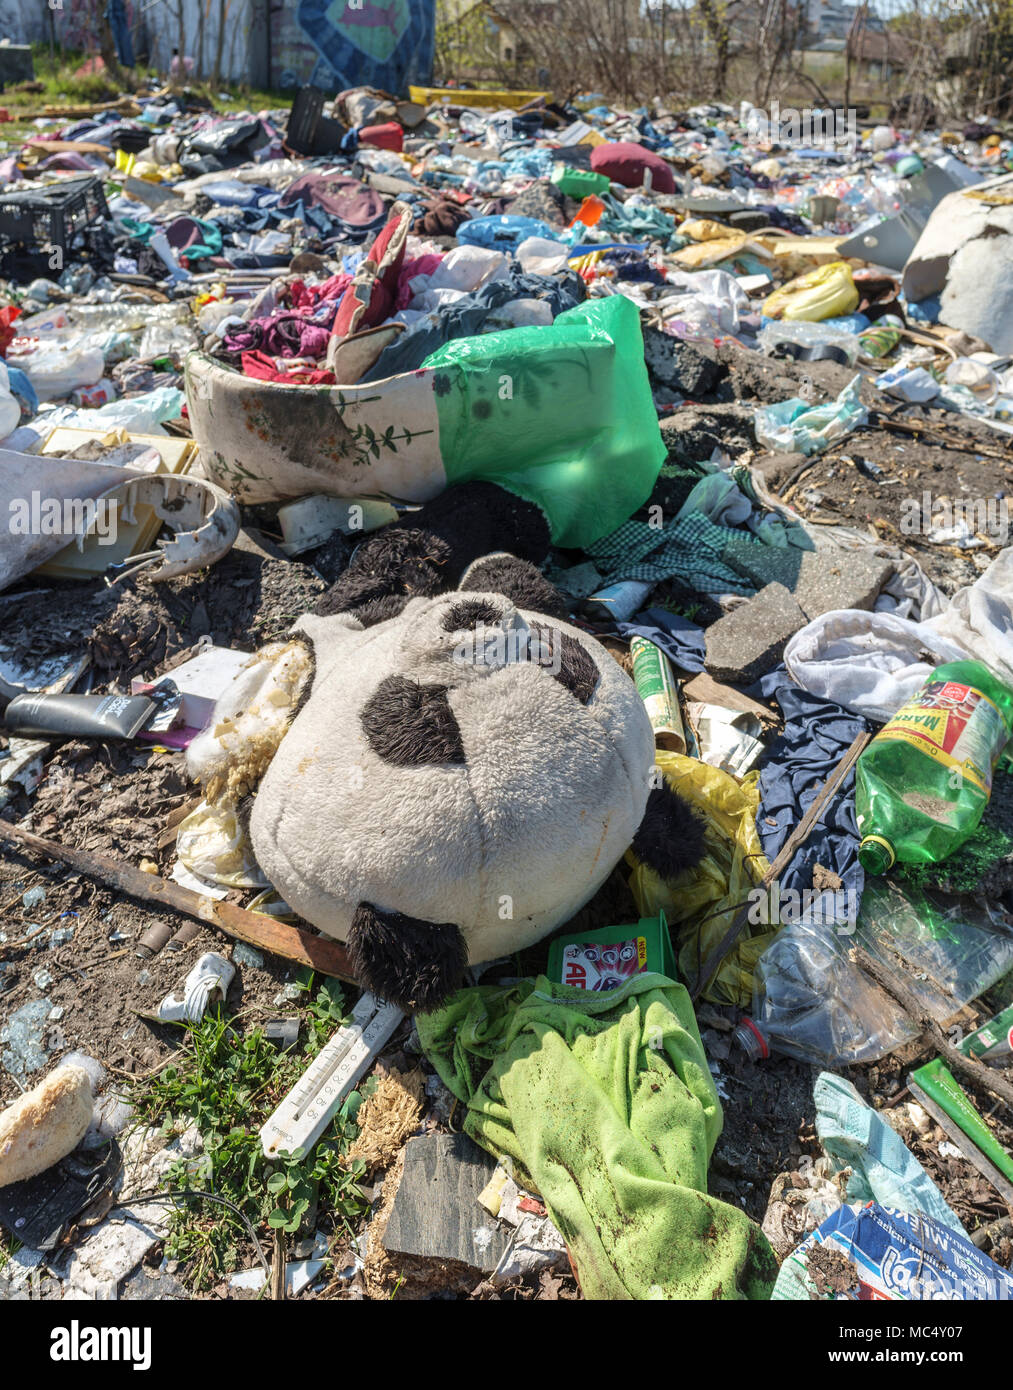 Old Panda teddy bear on the ground at a junkyard Stock Photo